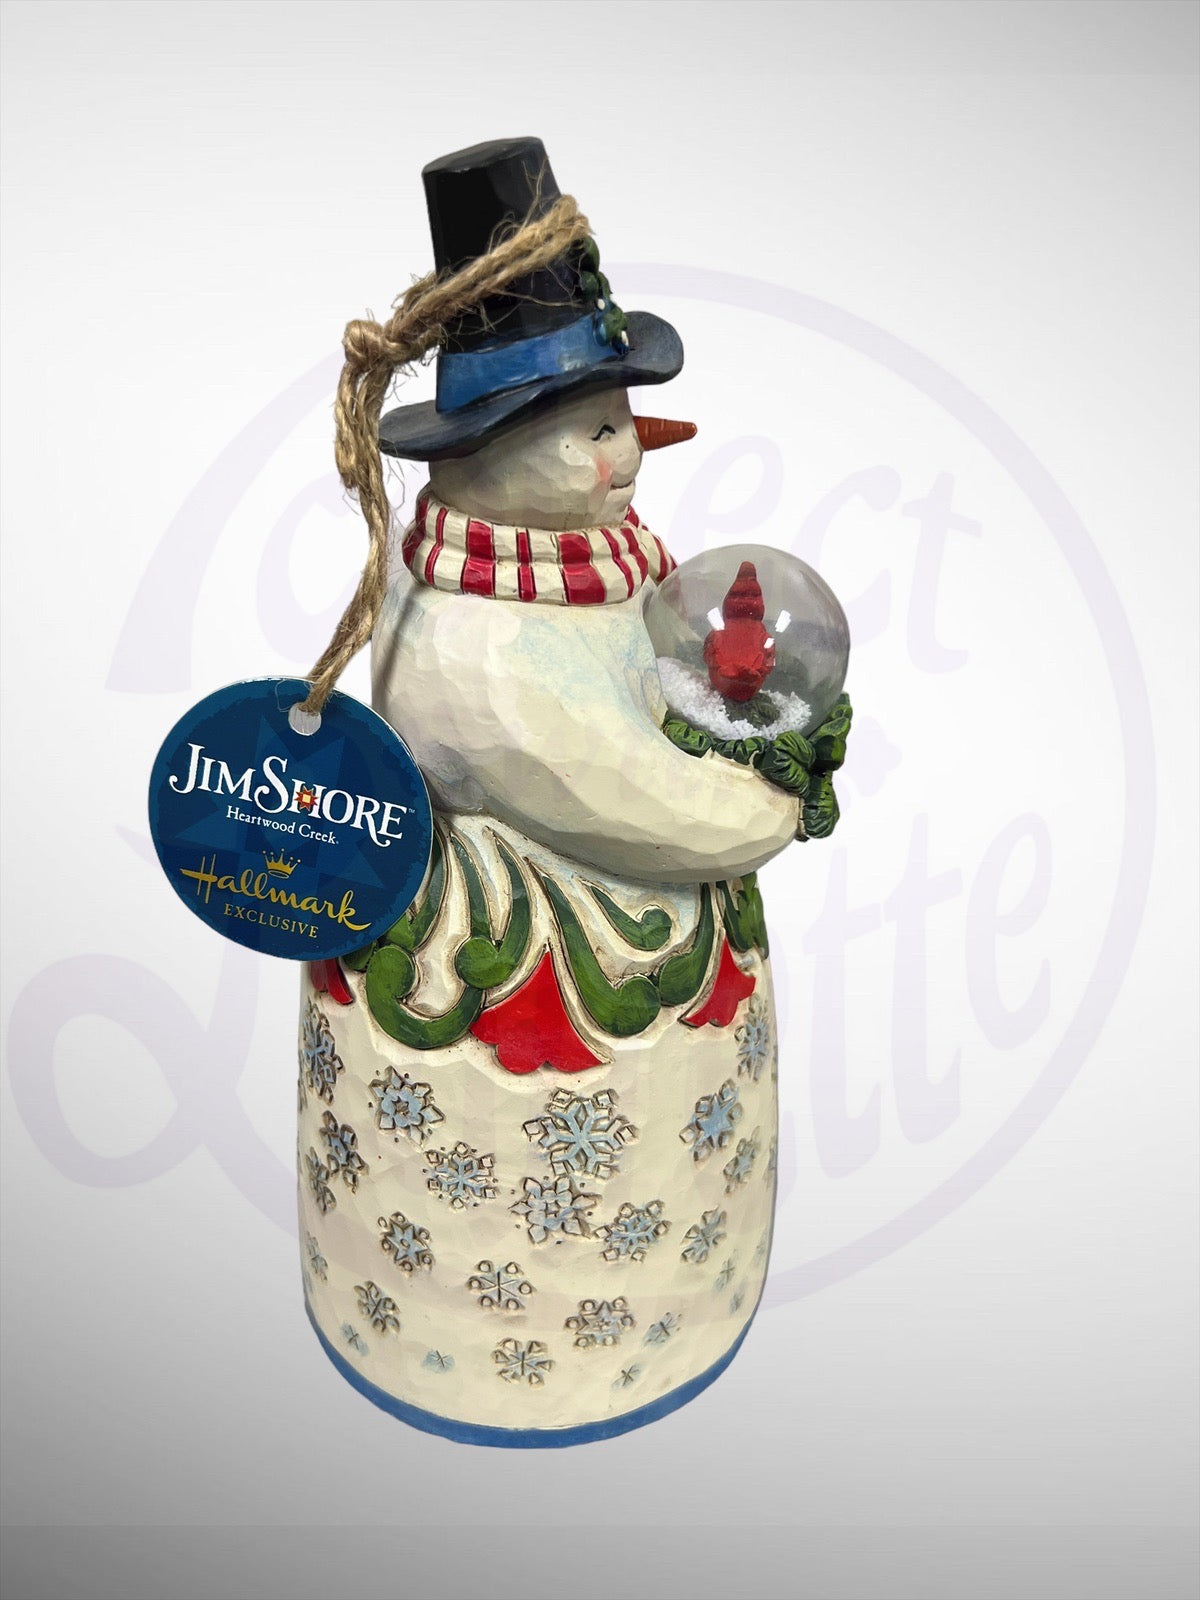 Jim Shore Heartwood Creek - Where Wonder Awaits Snowman with Cardinal Ball Figurine